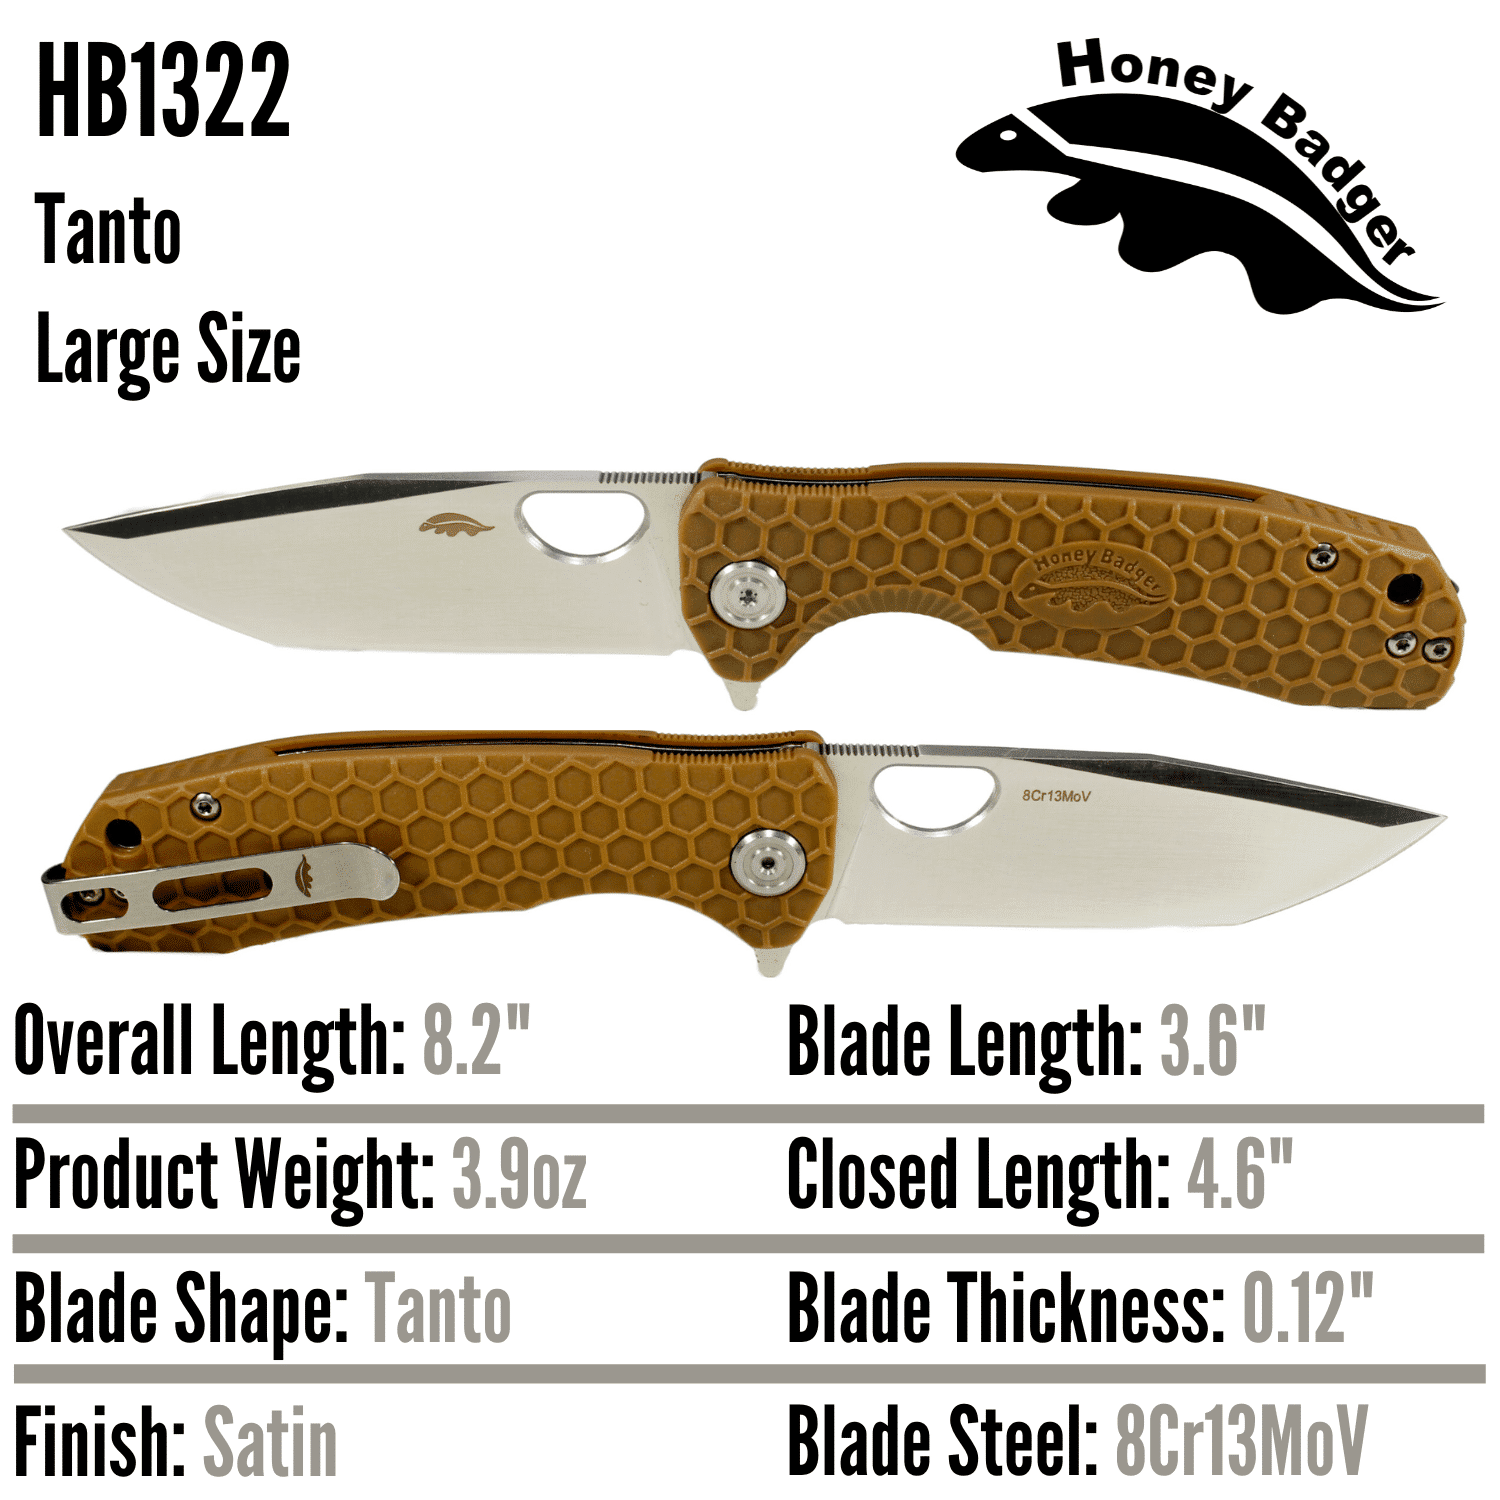 https://www.honeybadgerknives.com/wp-content/uploads/2022/02/HoneyBadger-HB1322-2.png